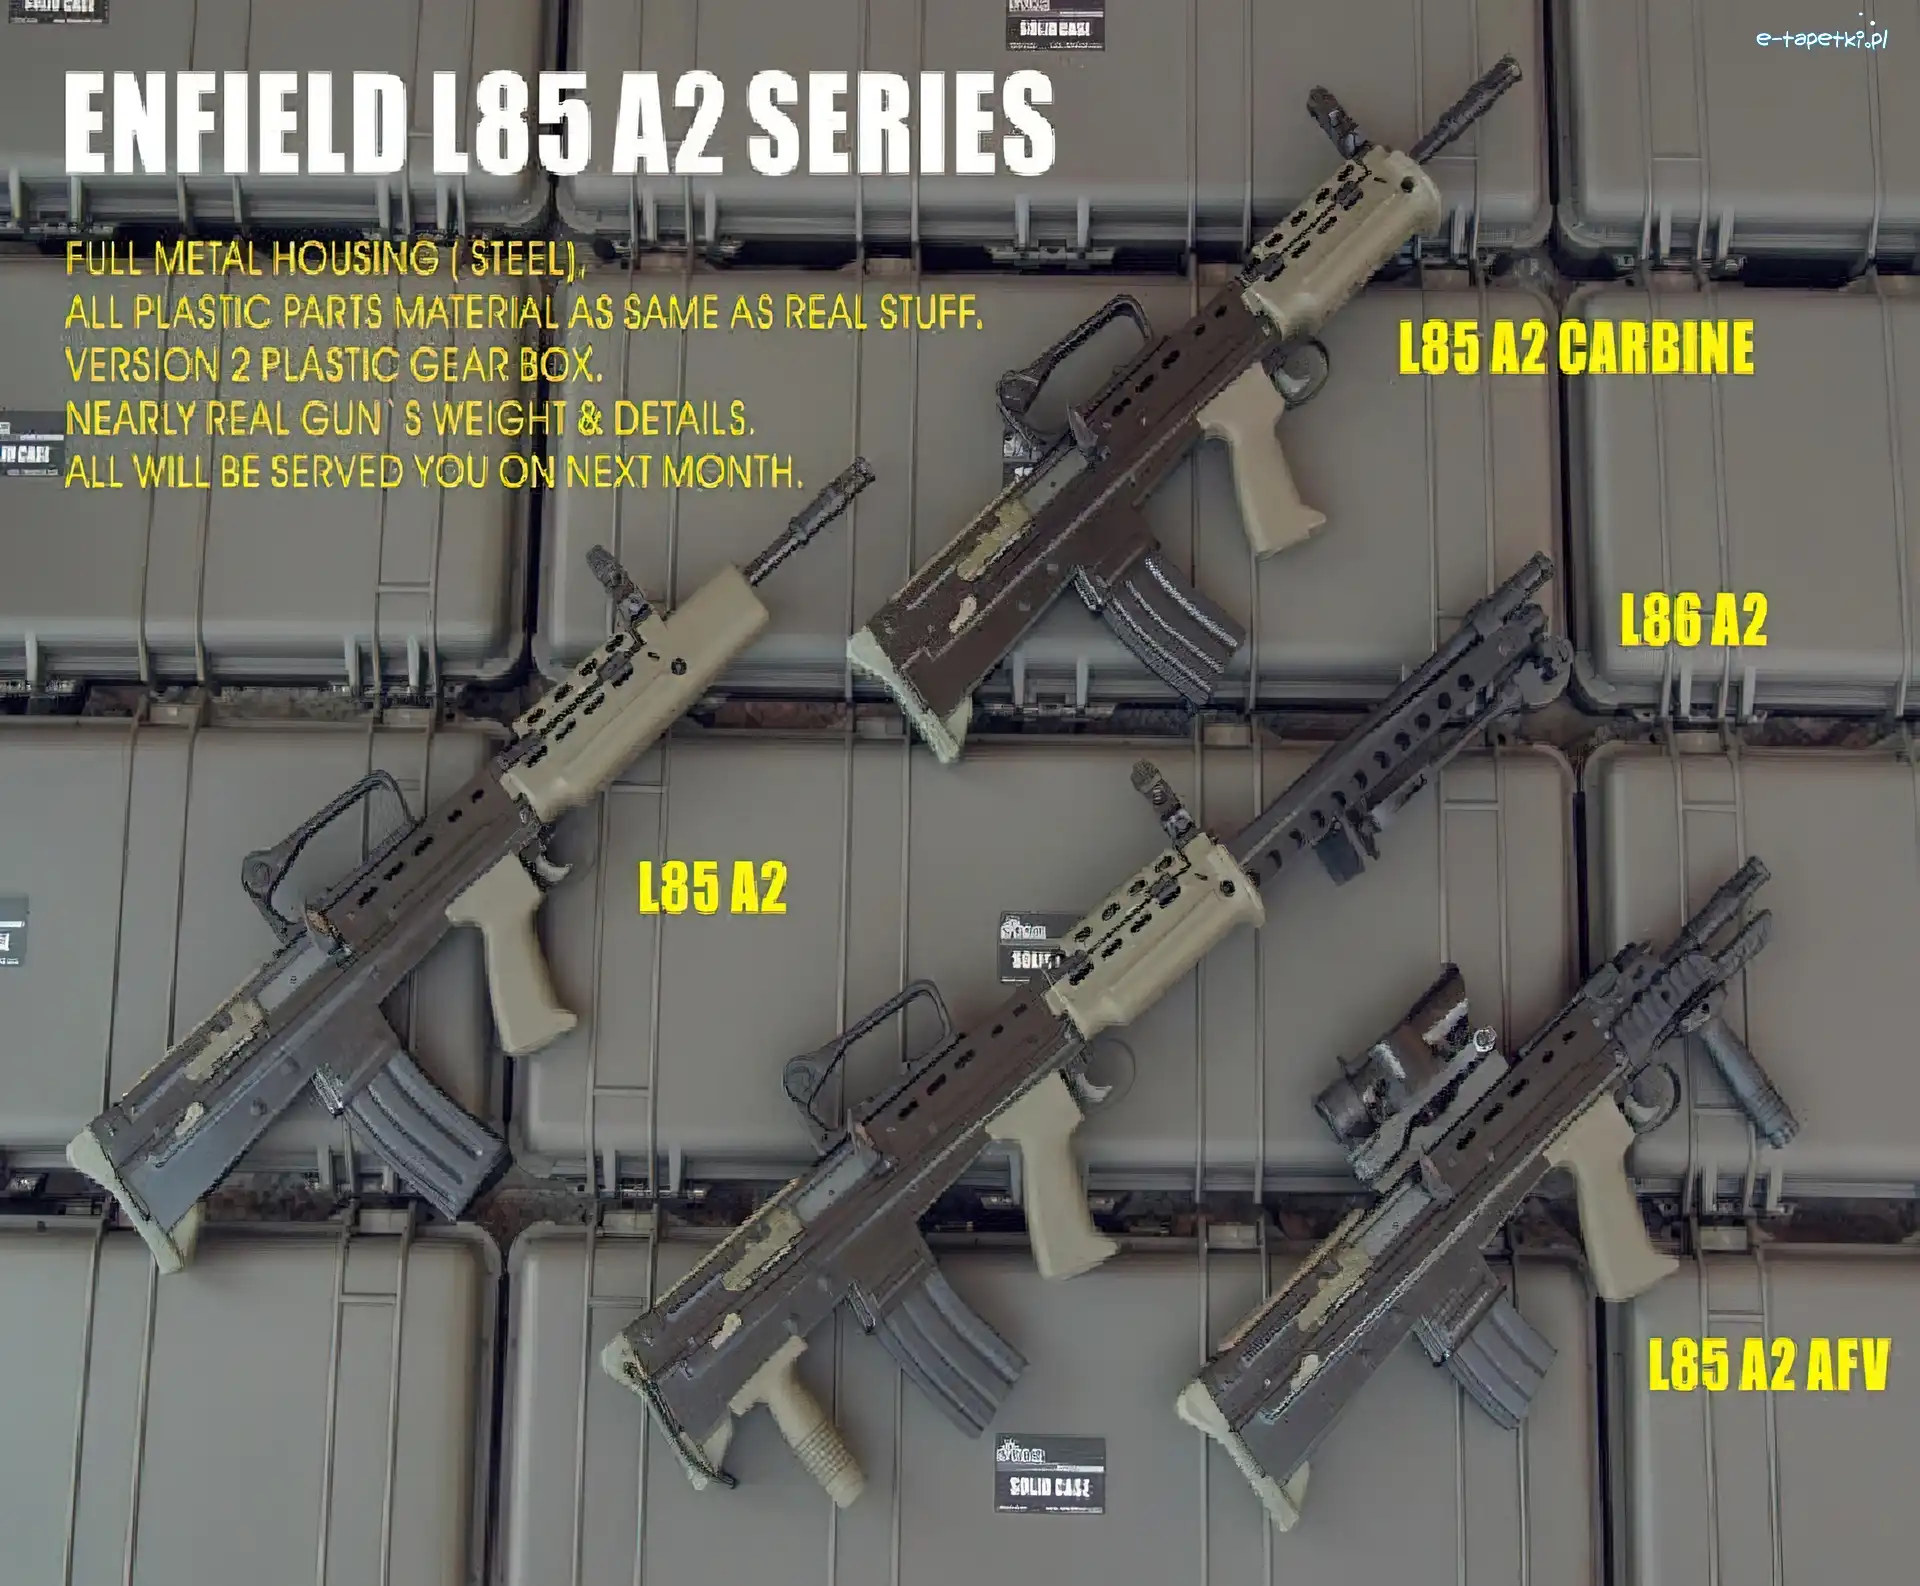 Broń, L85 A2 CARBINE, L85 A2, L86 A2, L85 A2 AFV